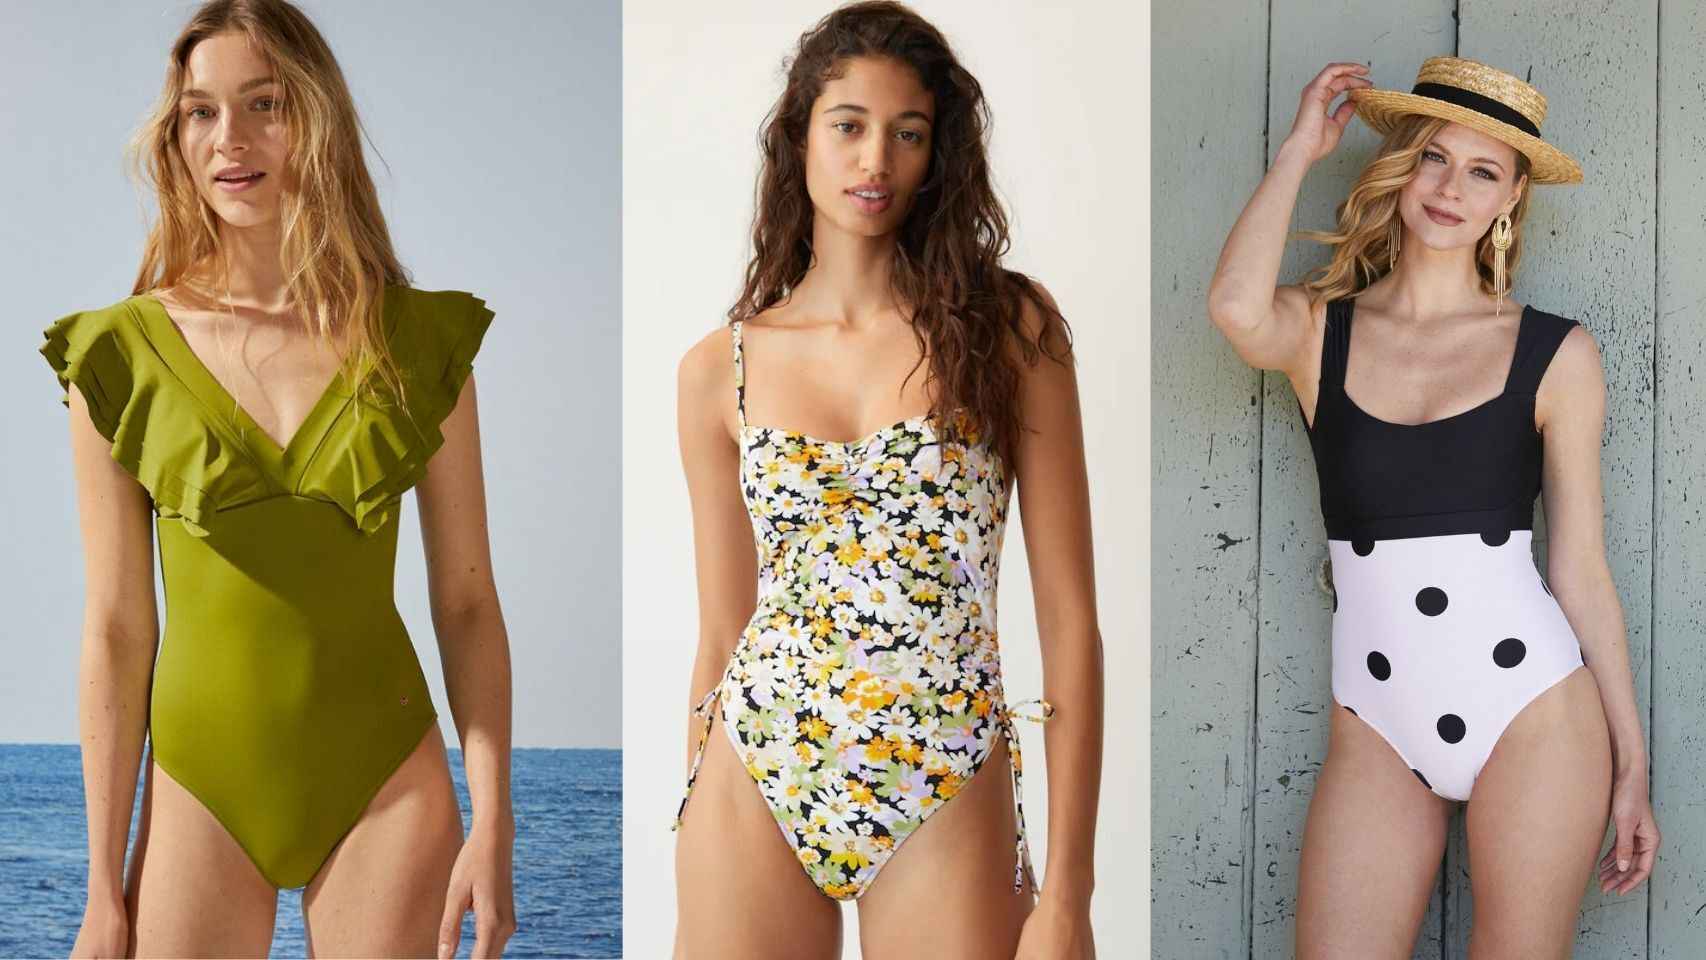 Así son los bañadores y bikinis que desearás lucir este verano.